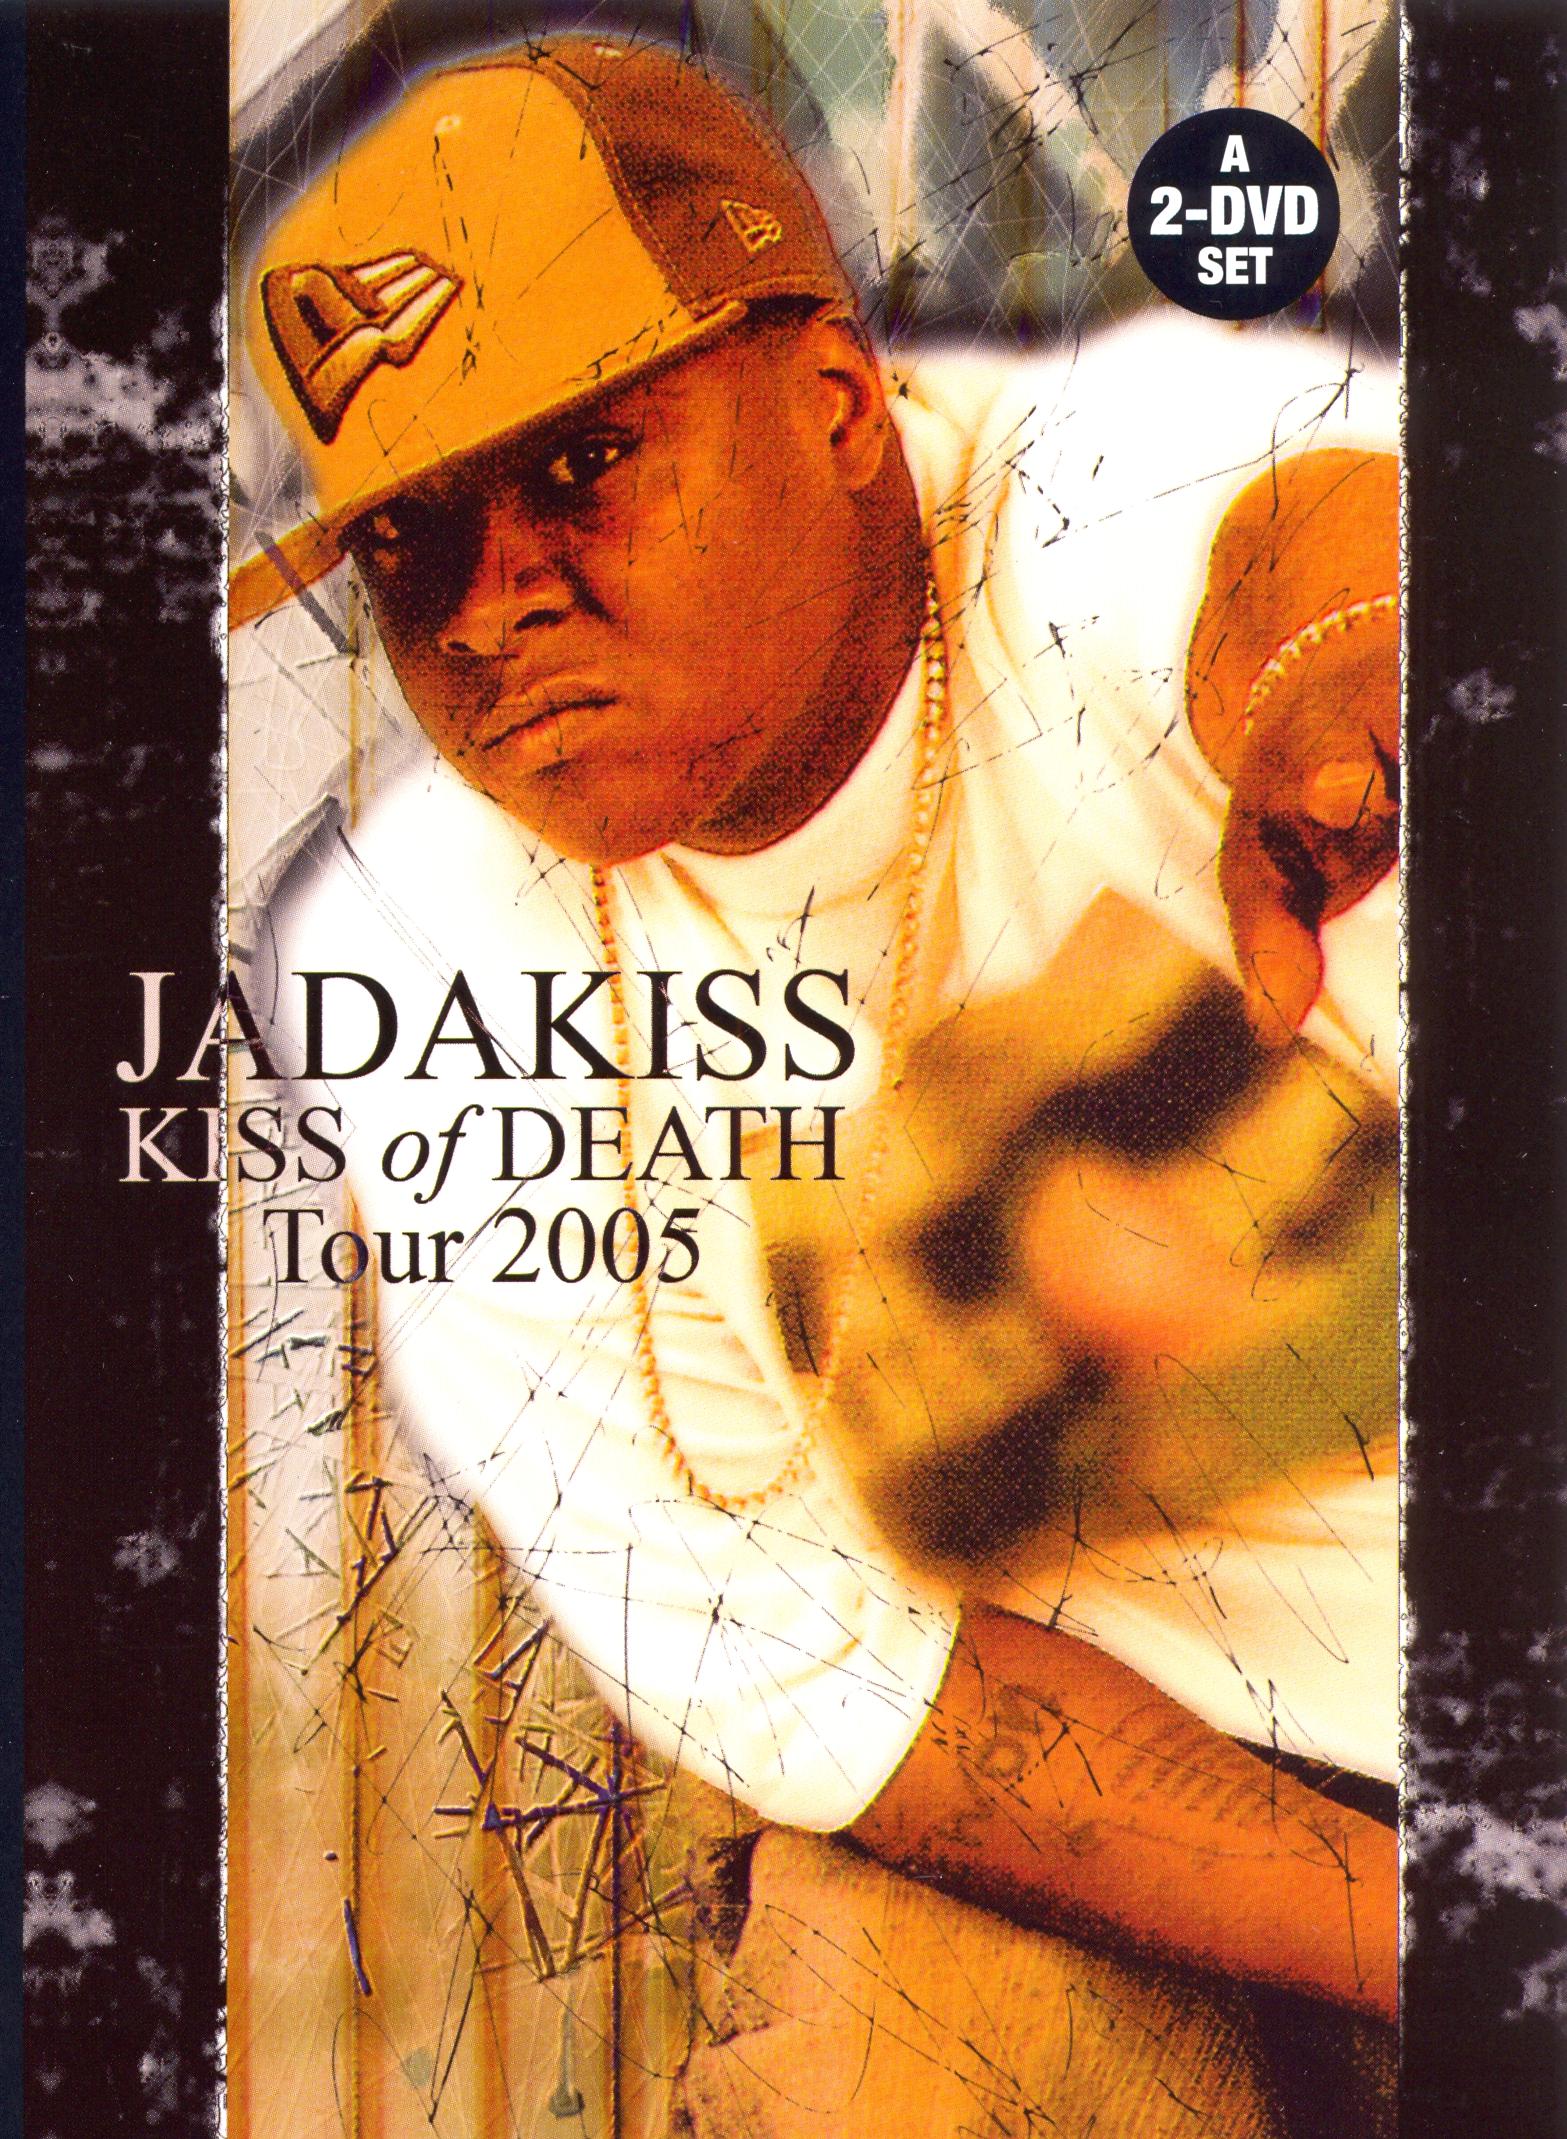 Jadakiss Kiss of Death Tour 2005 (2005) Synopsis, Characteristics